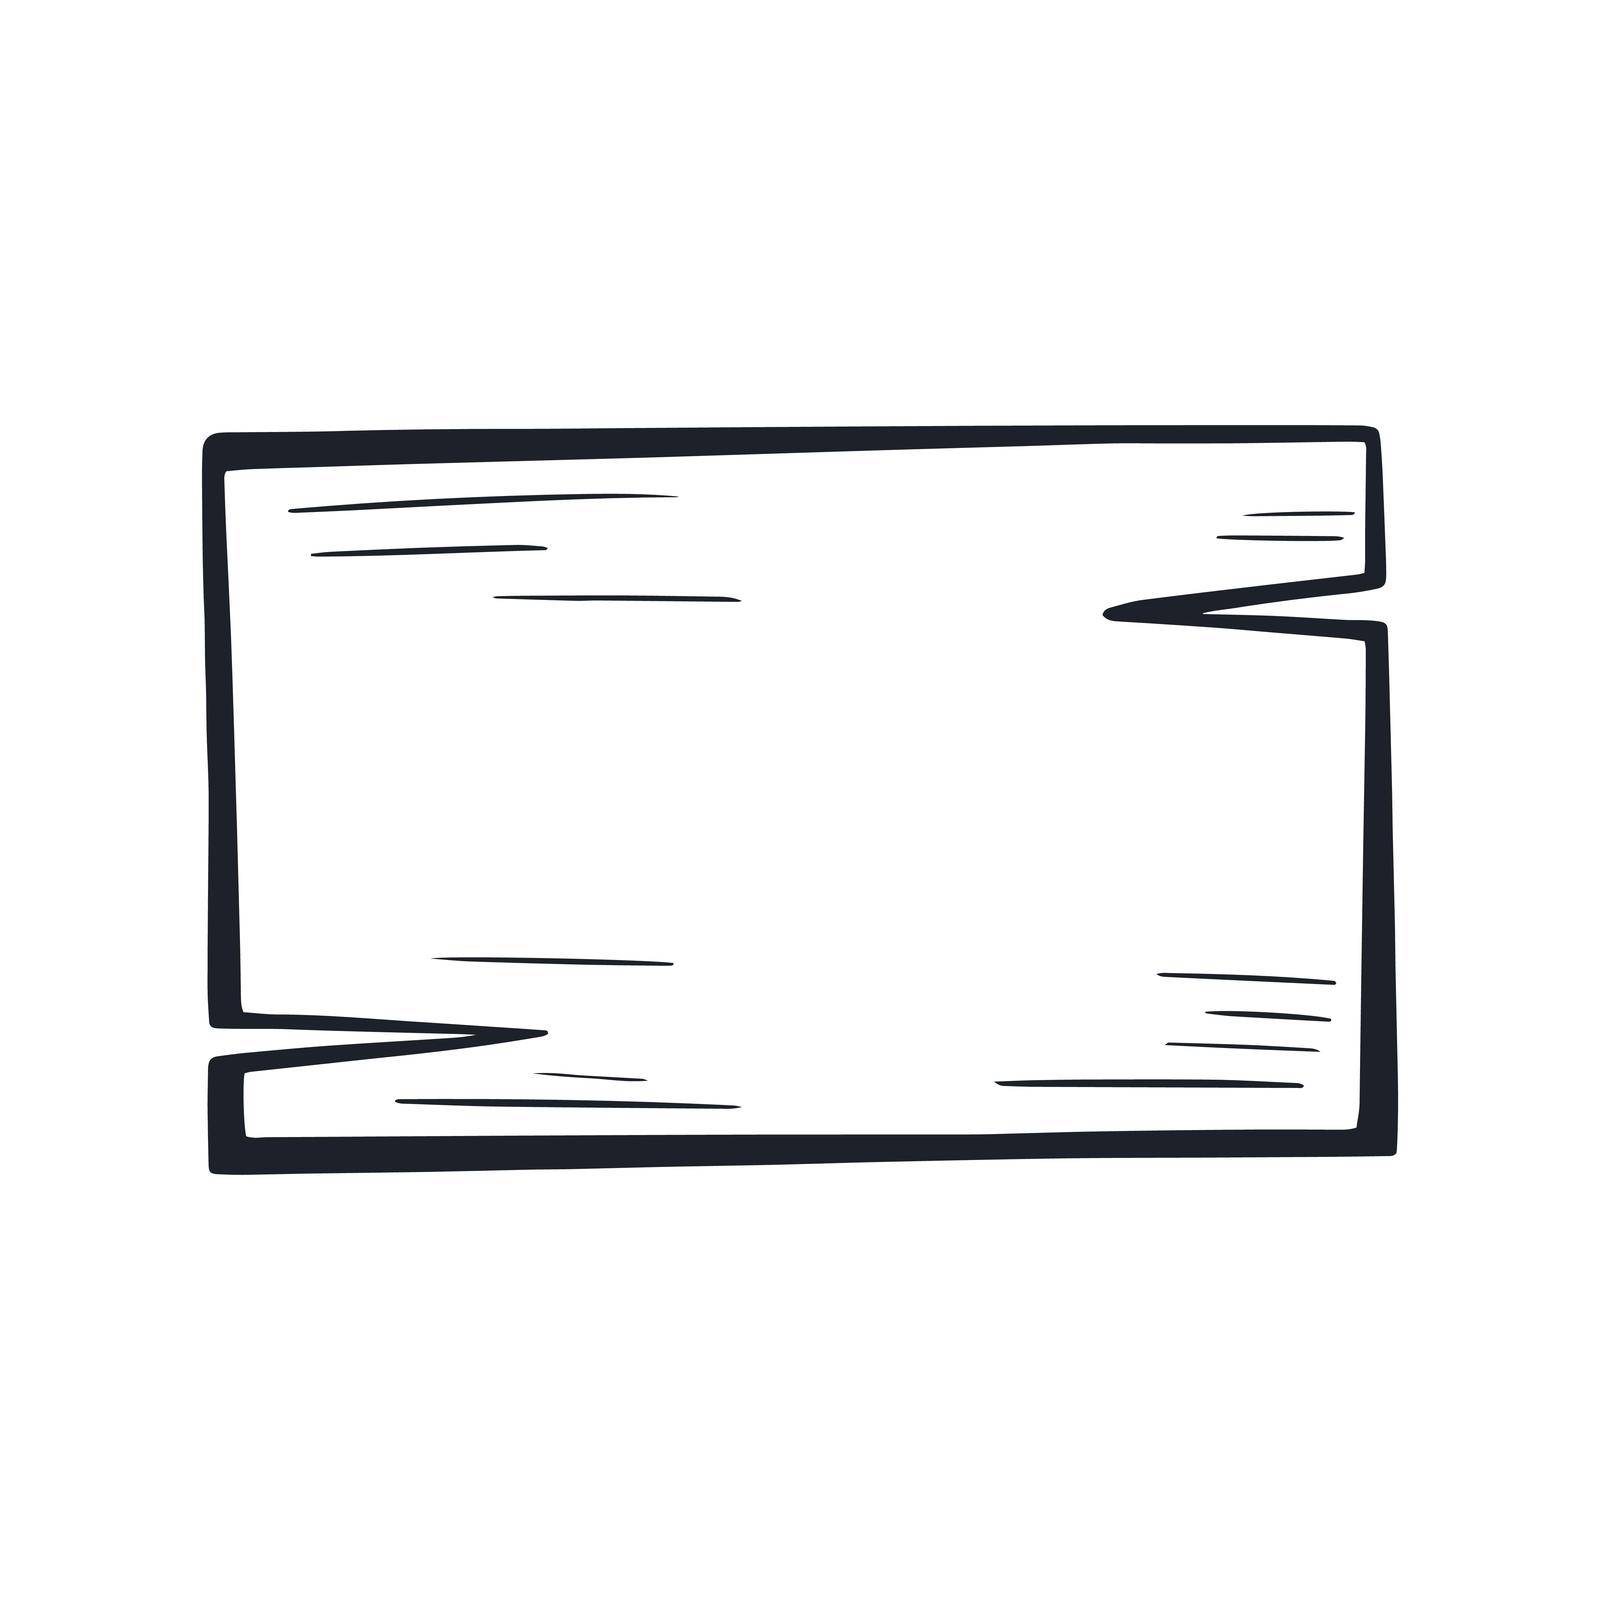 Empty wooden rectangular sign doodle style by TassiaK